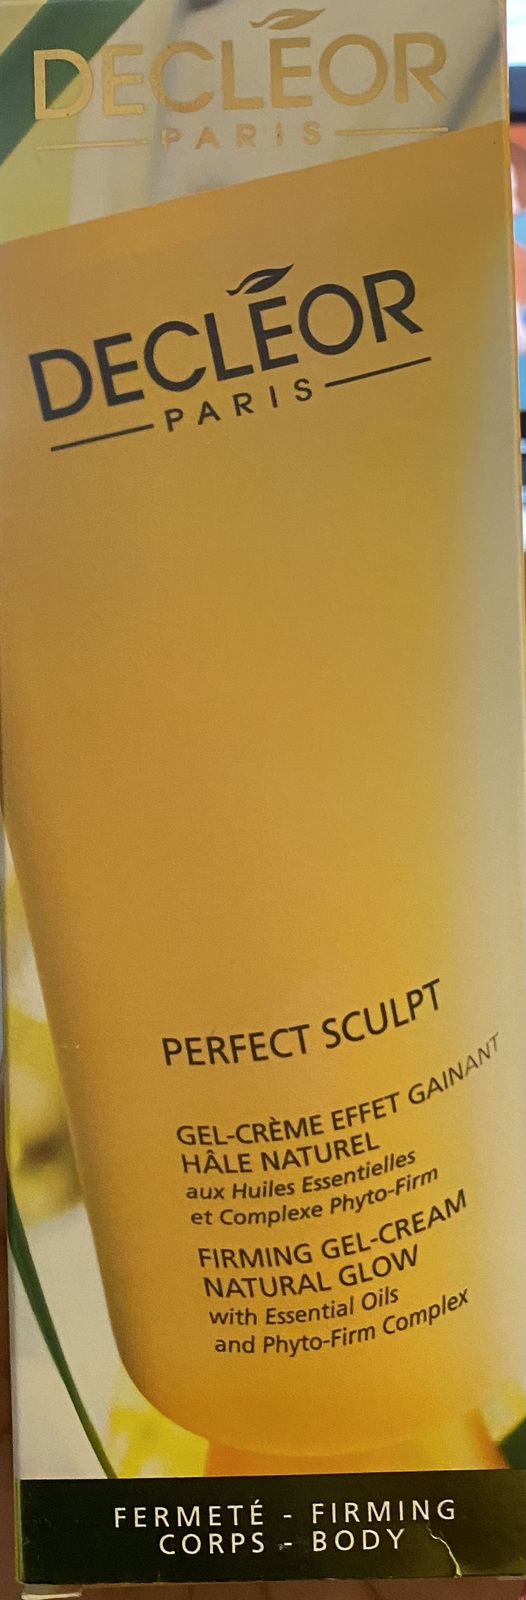 Decleor Paris - Perfect Sculpt - Stretch Mark Restructuring Gel-Cream 6.7 Fl. Oz - $72.00